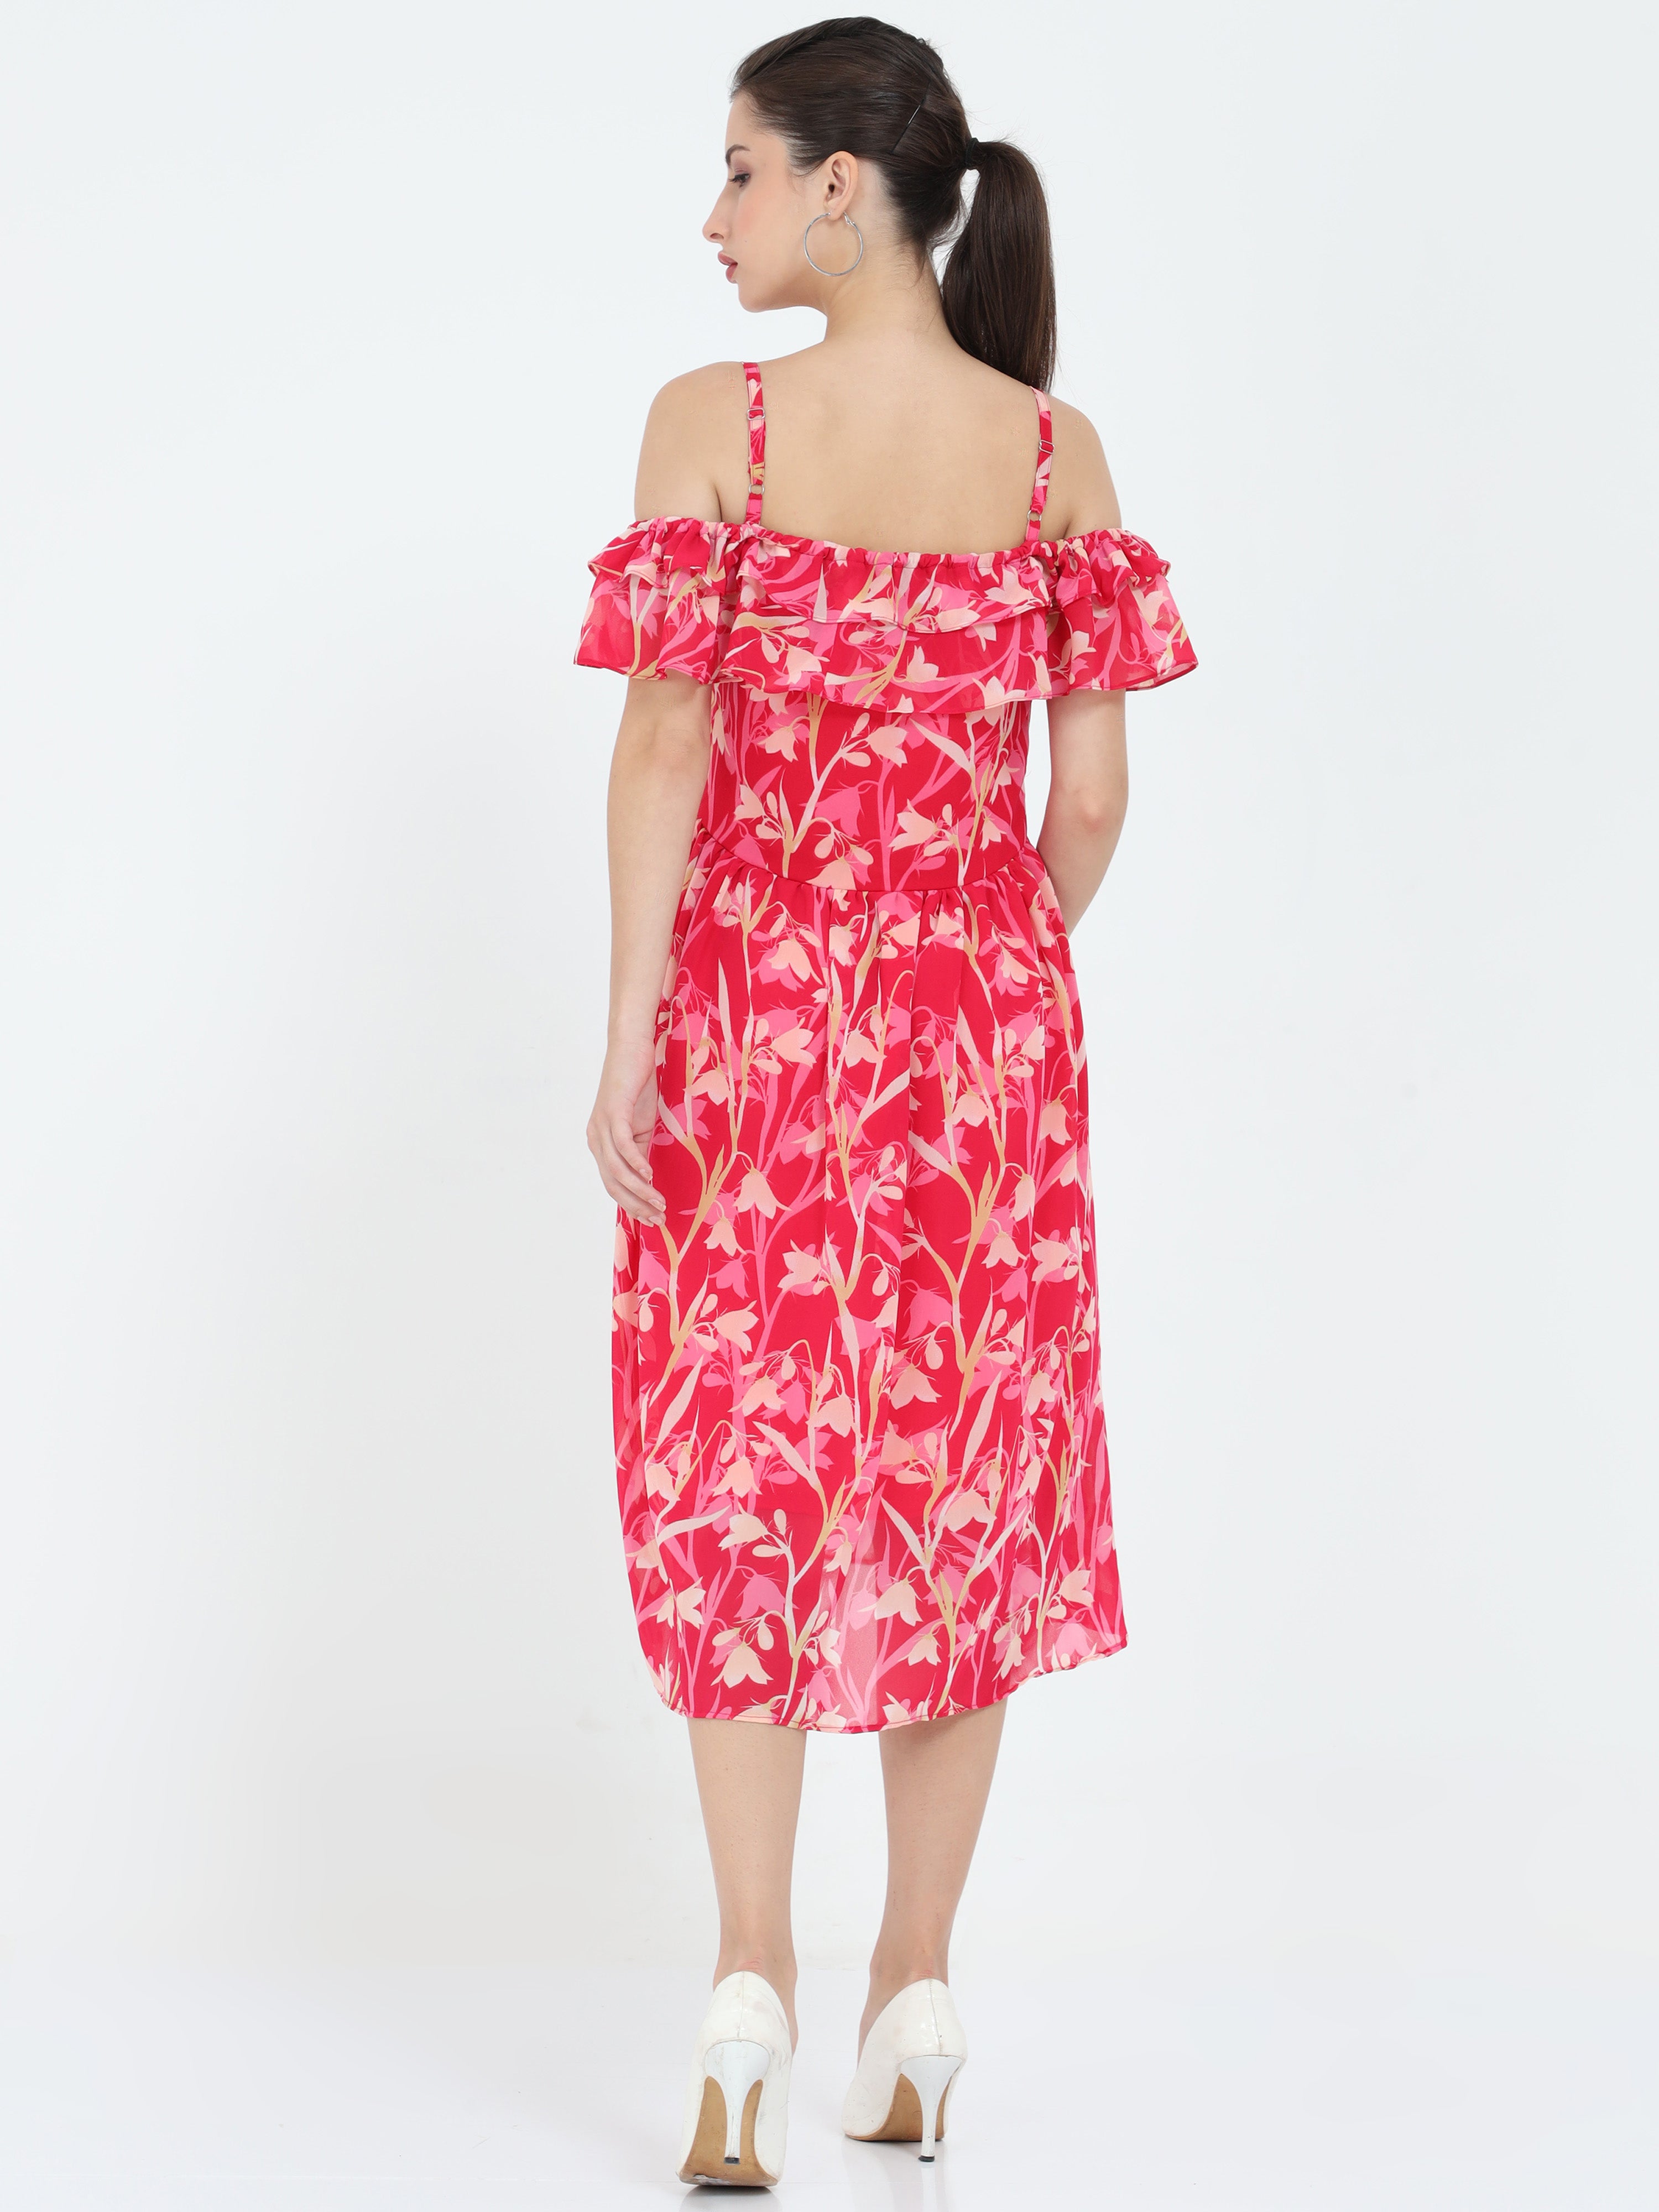 The Trendy Treasure - Botanical Printed Strap Shoulder Elegant Multi Layer Frilled Dress